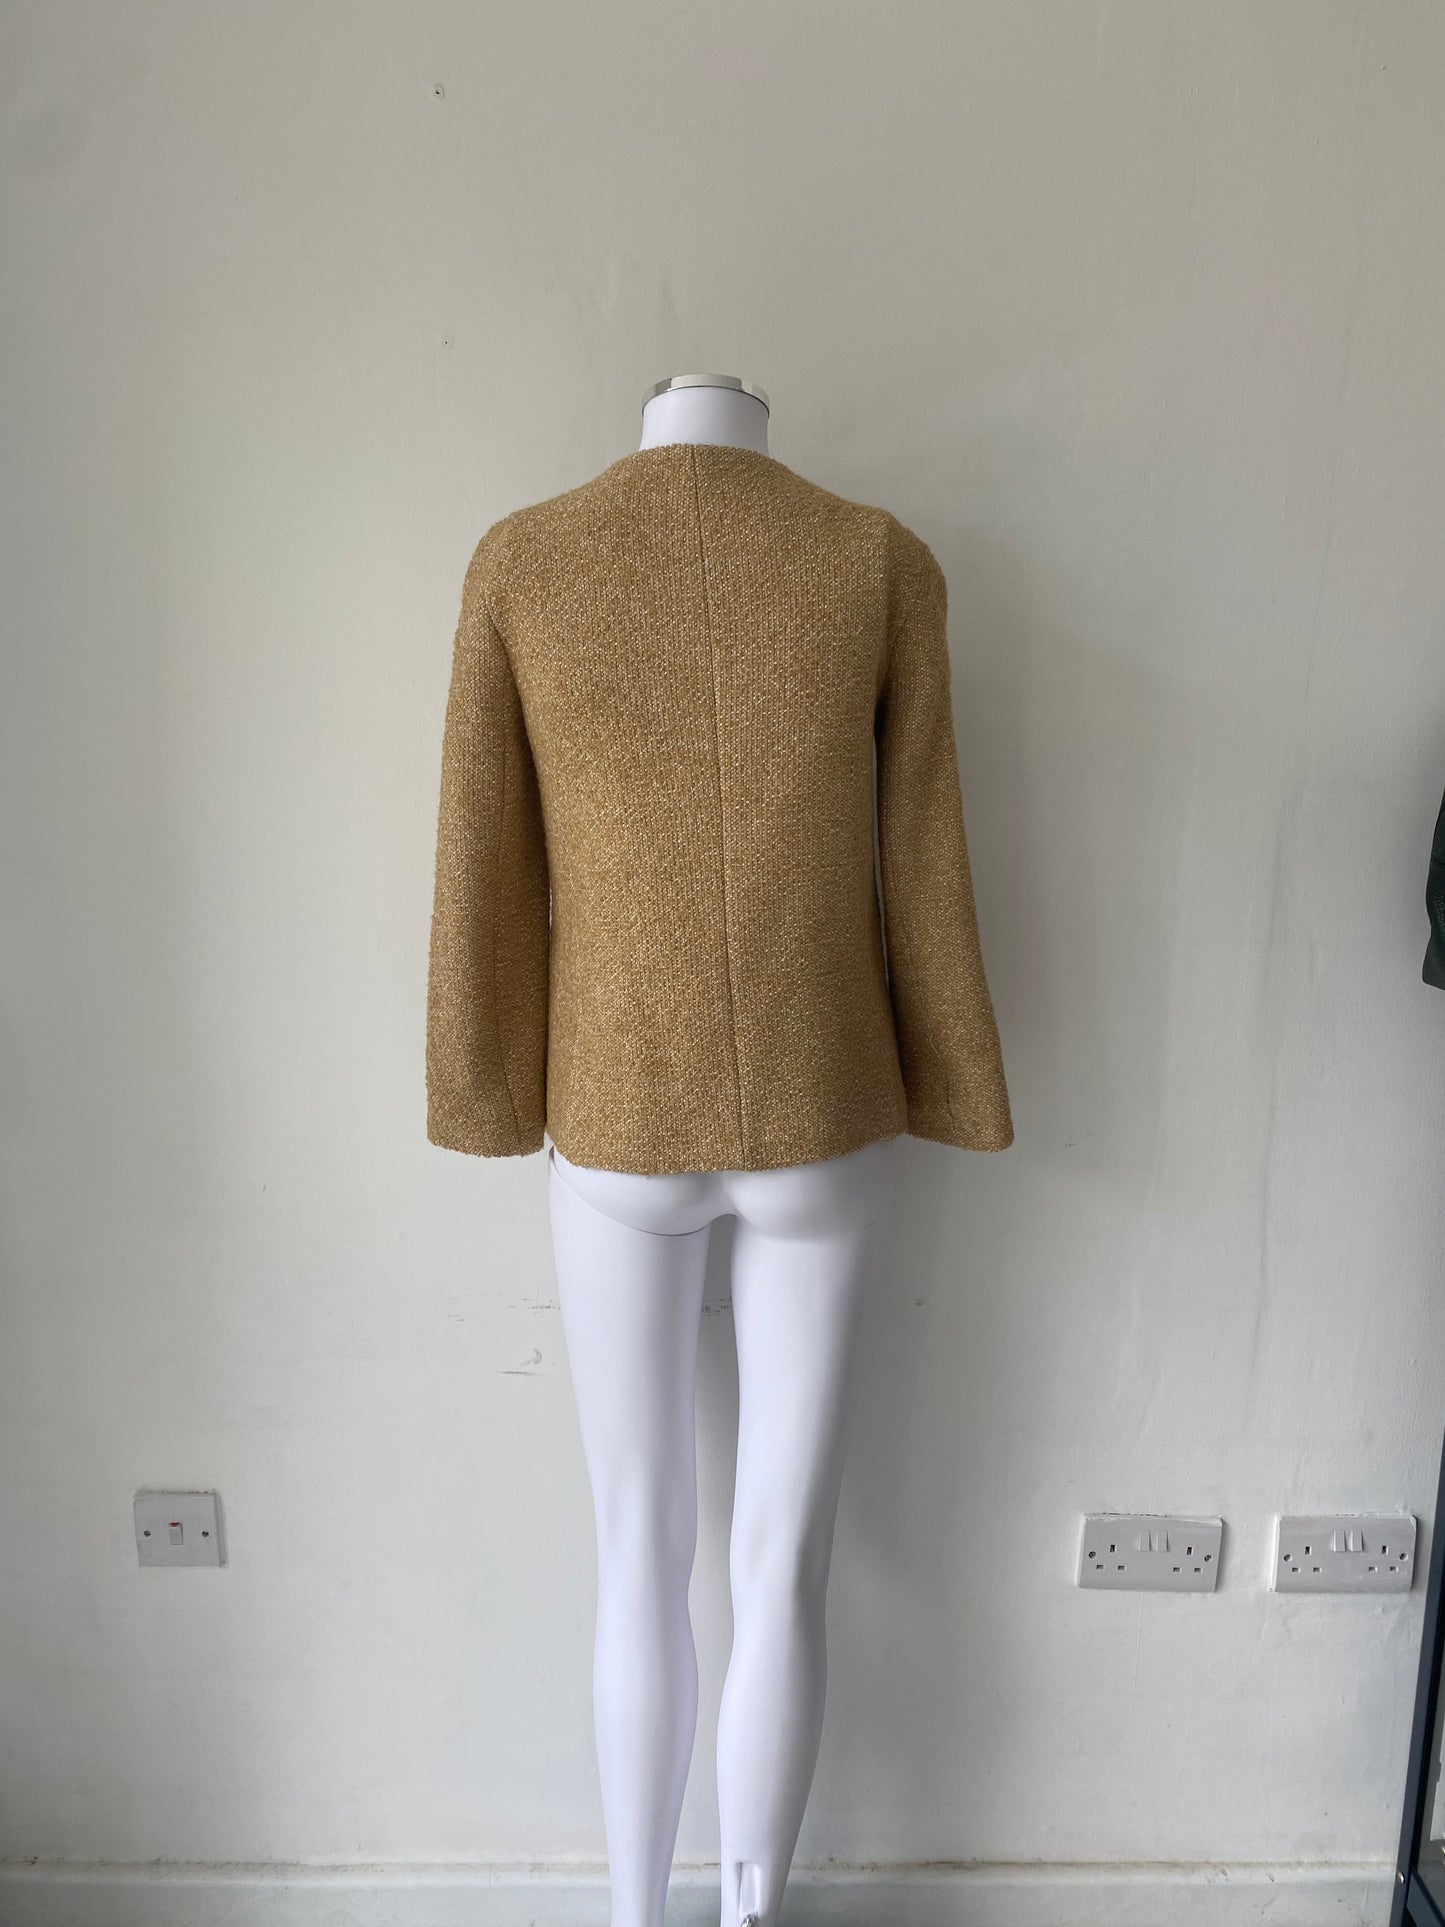 Zara Tweed Jacket Size 6-8